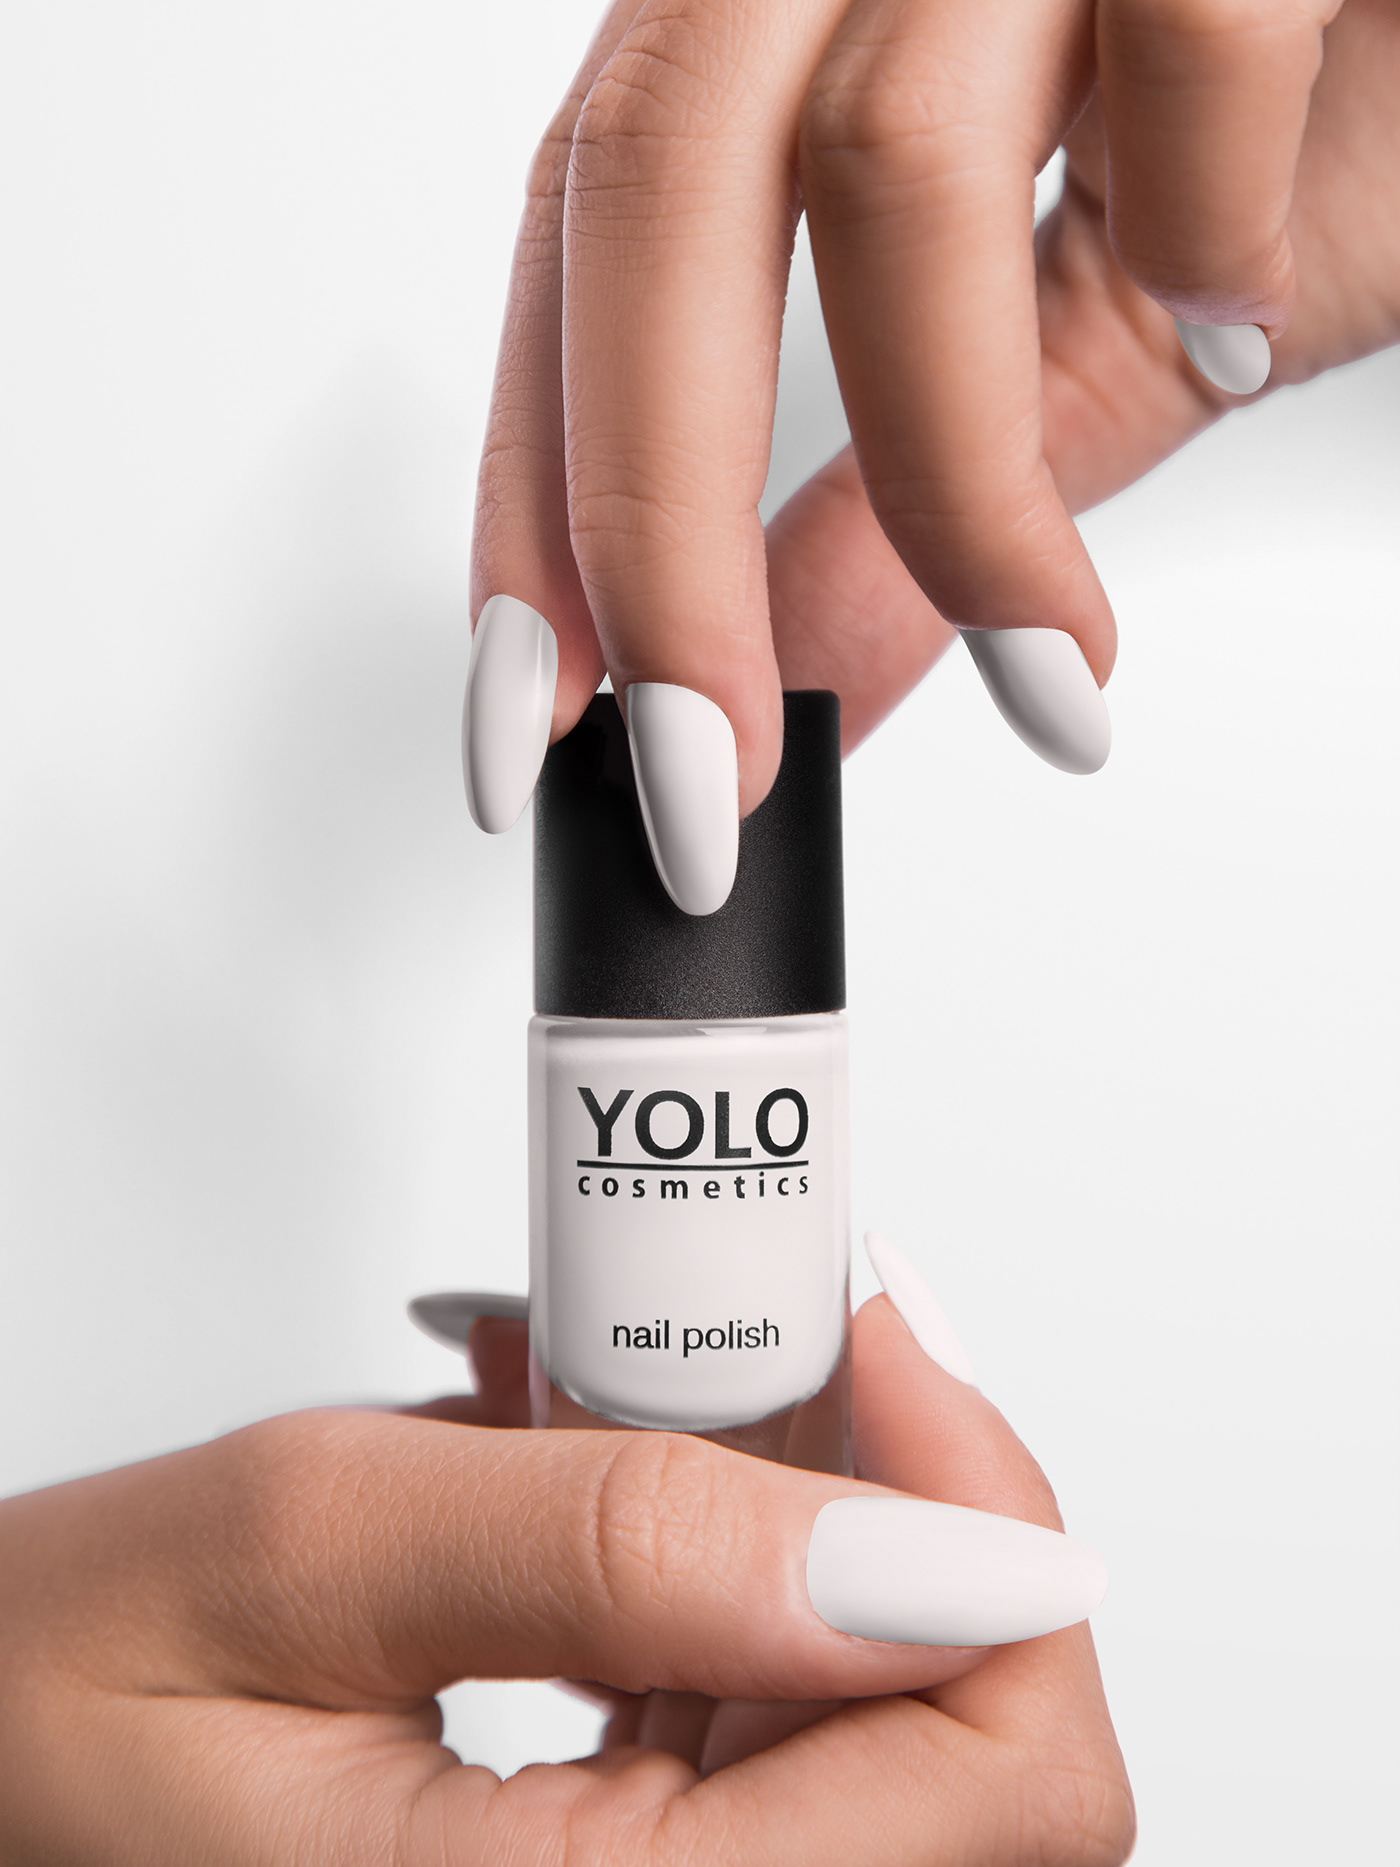 YOLO nail polish on Behance